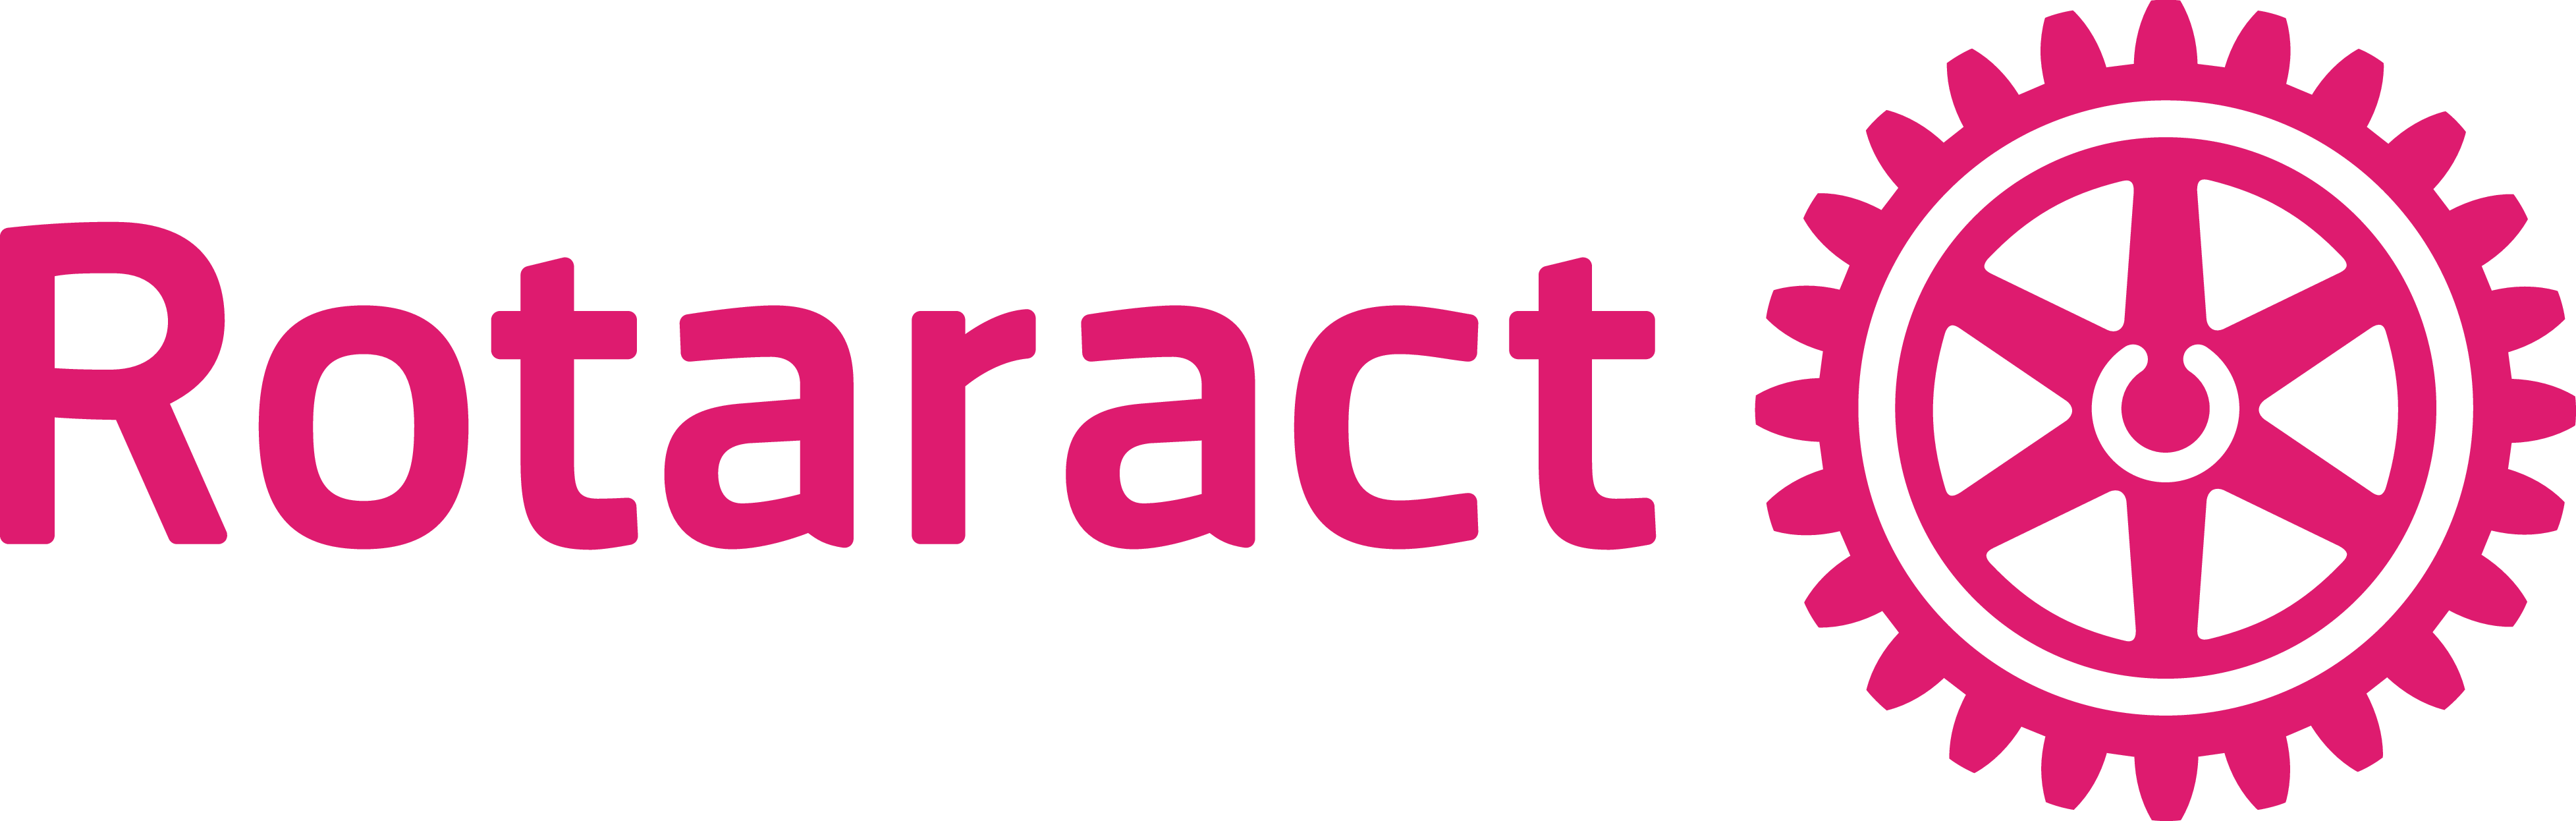 Rotaract Masterbrand Simplified